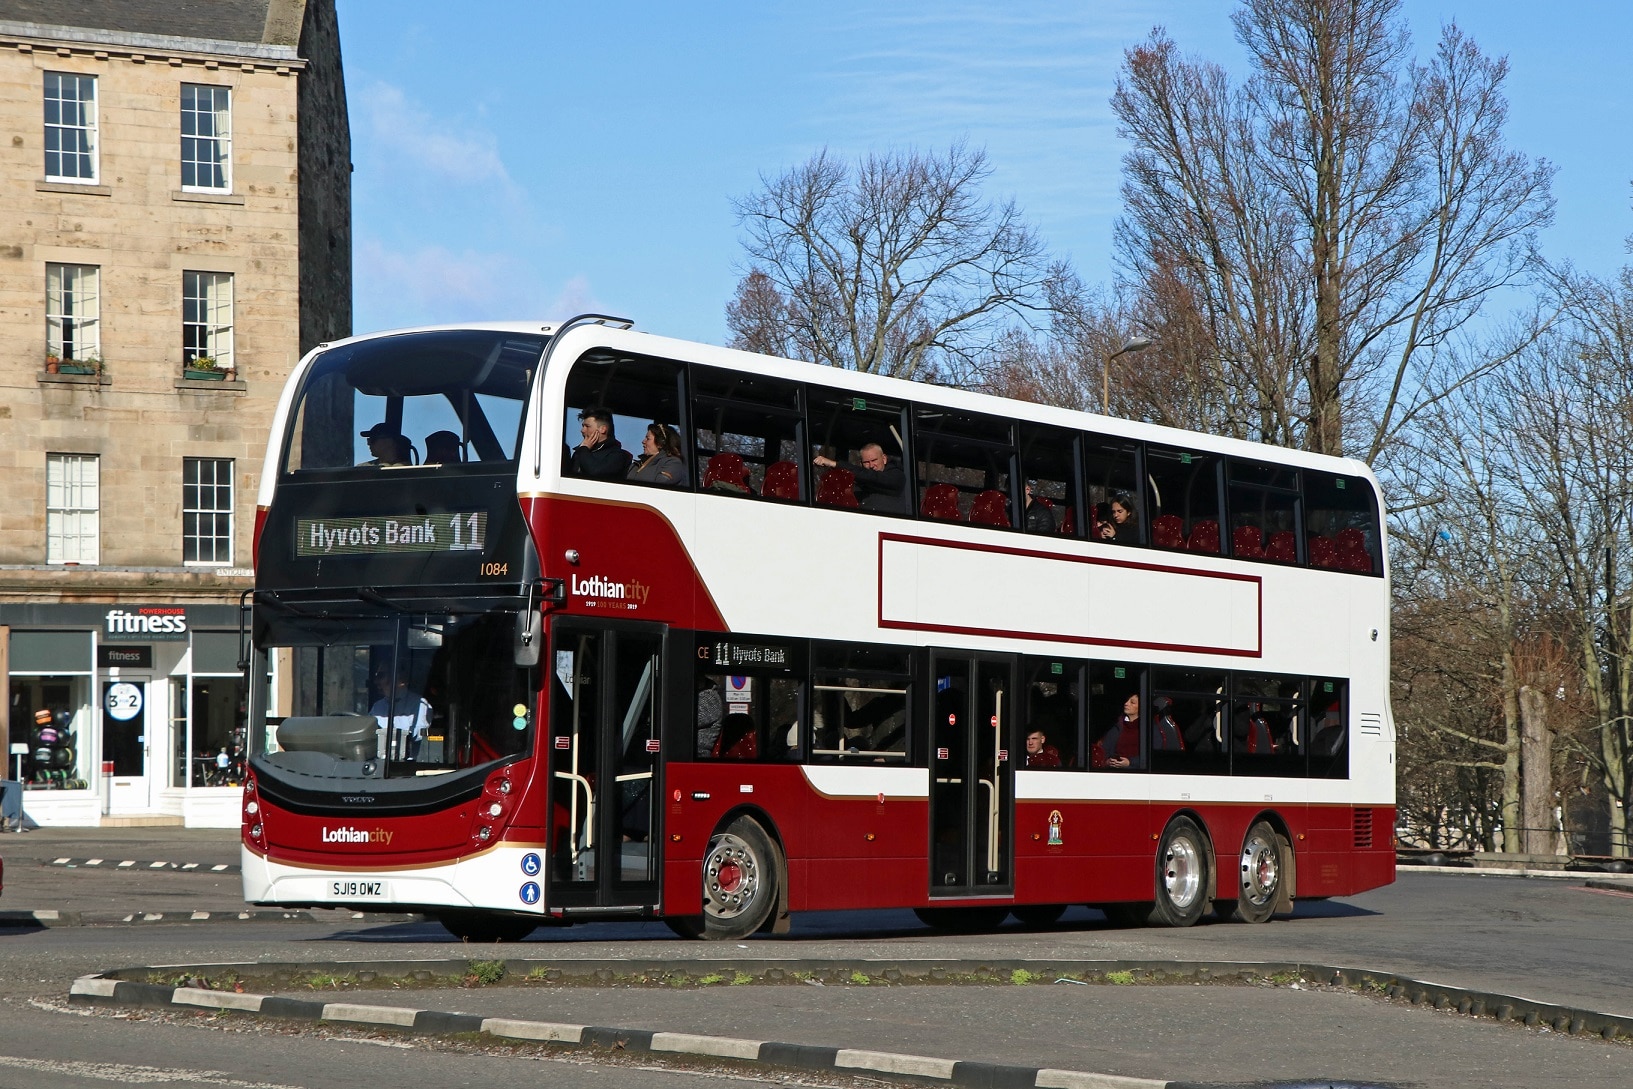 Bus priority in Scotland